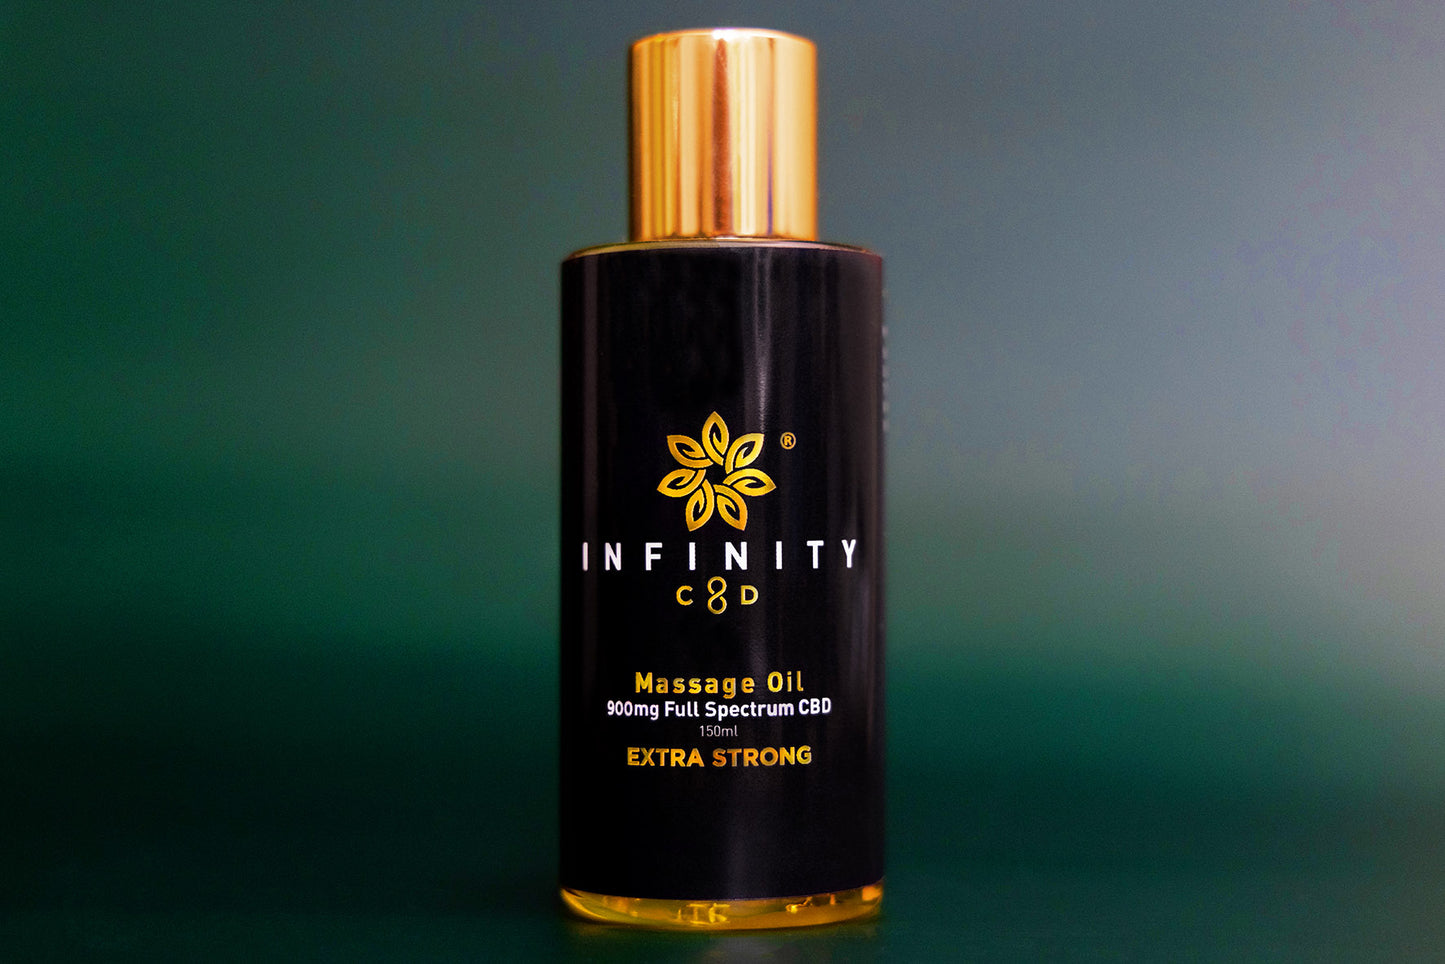 Extra Strong CBD Massage Oil by Infinity CBD